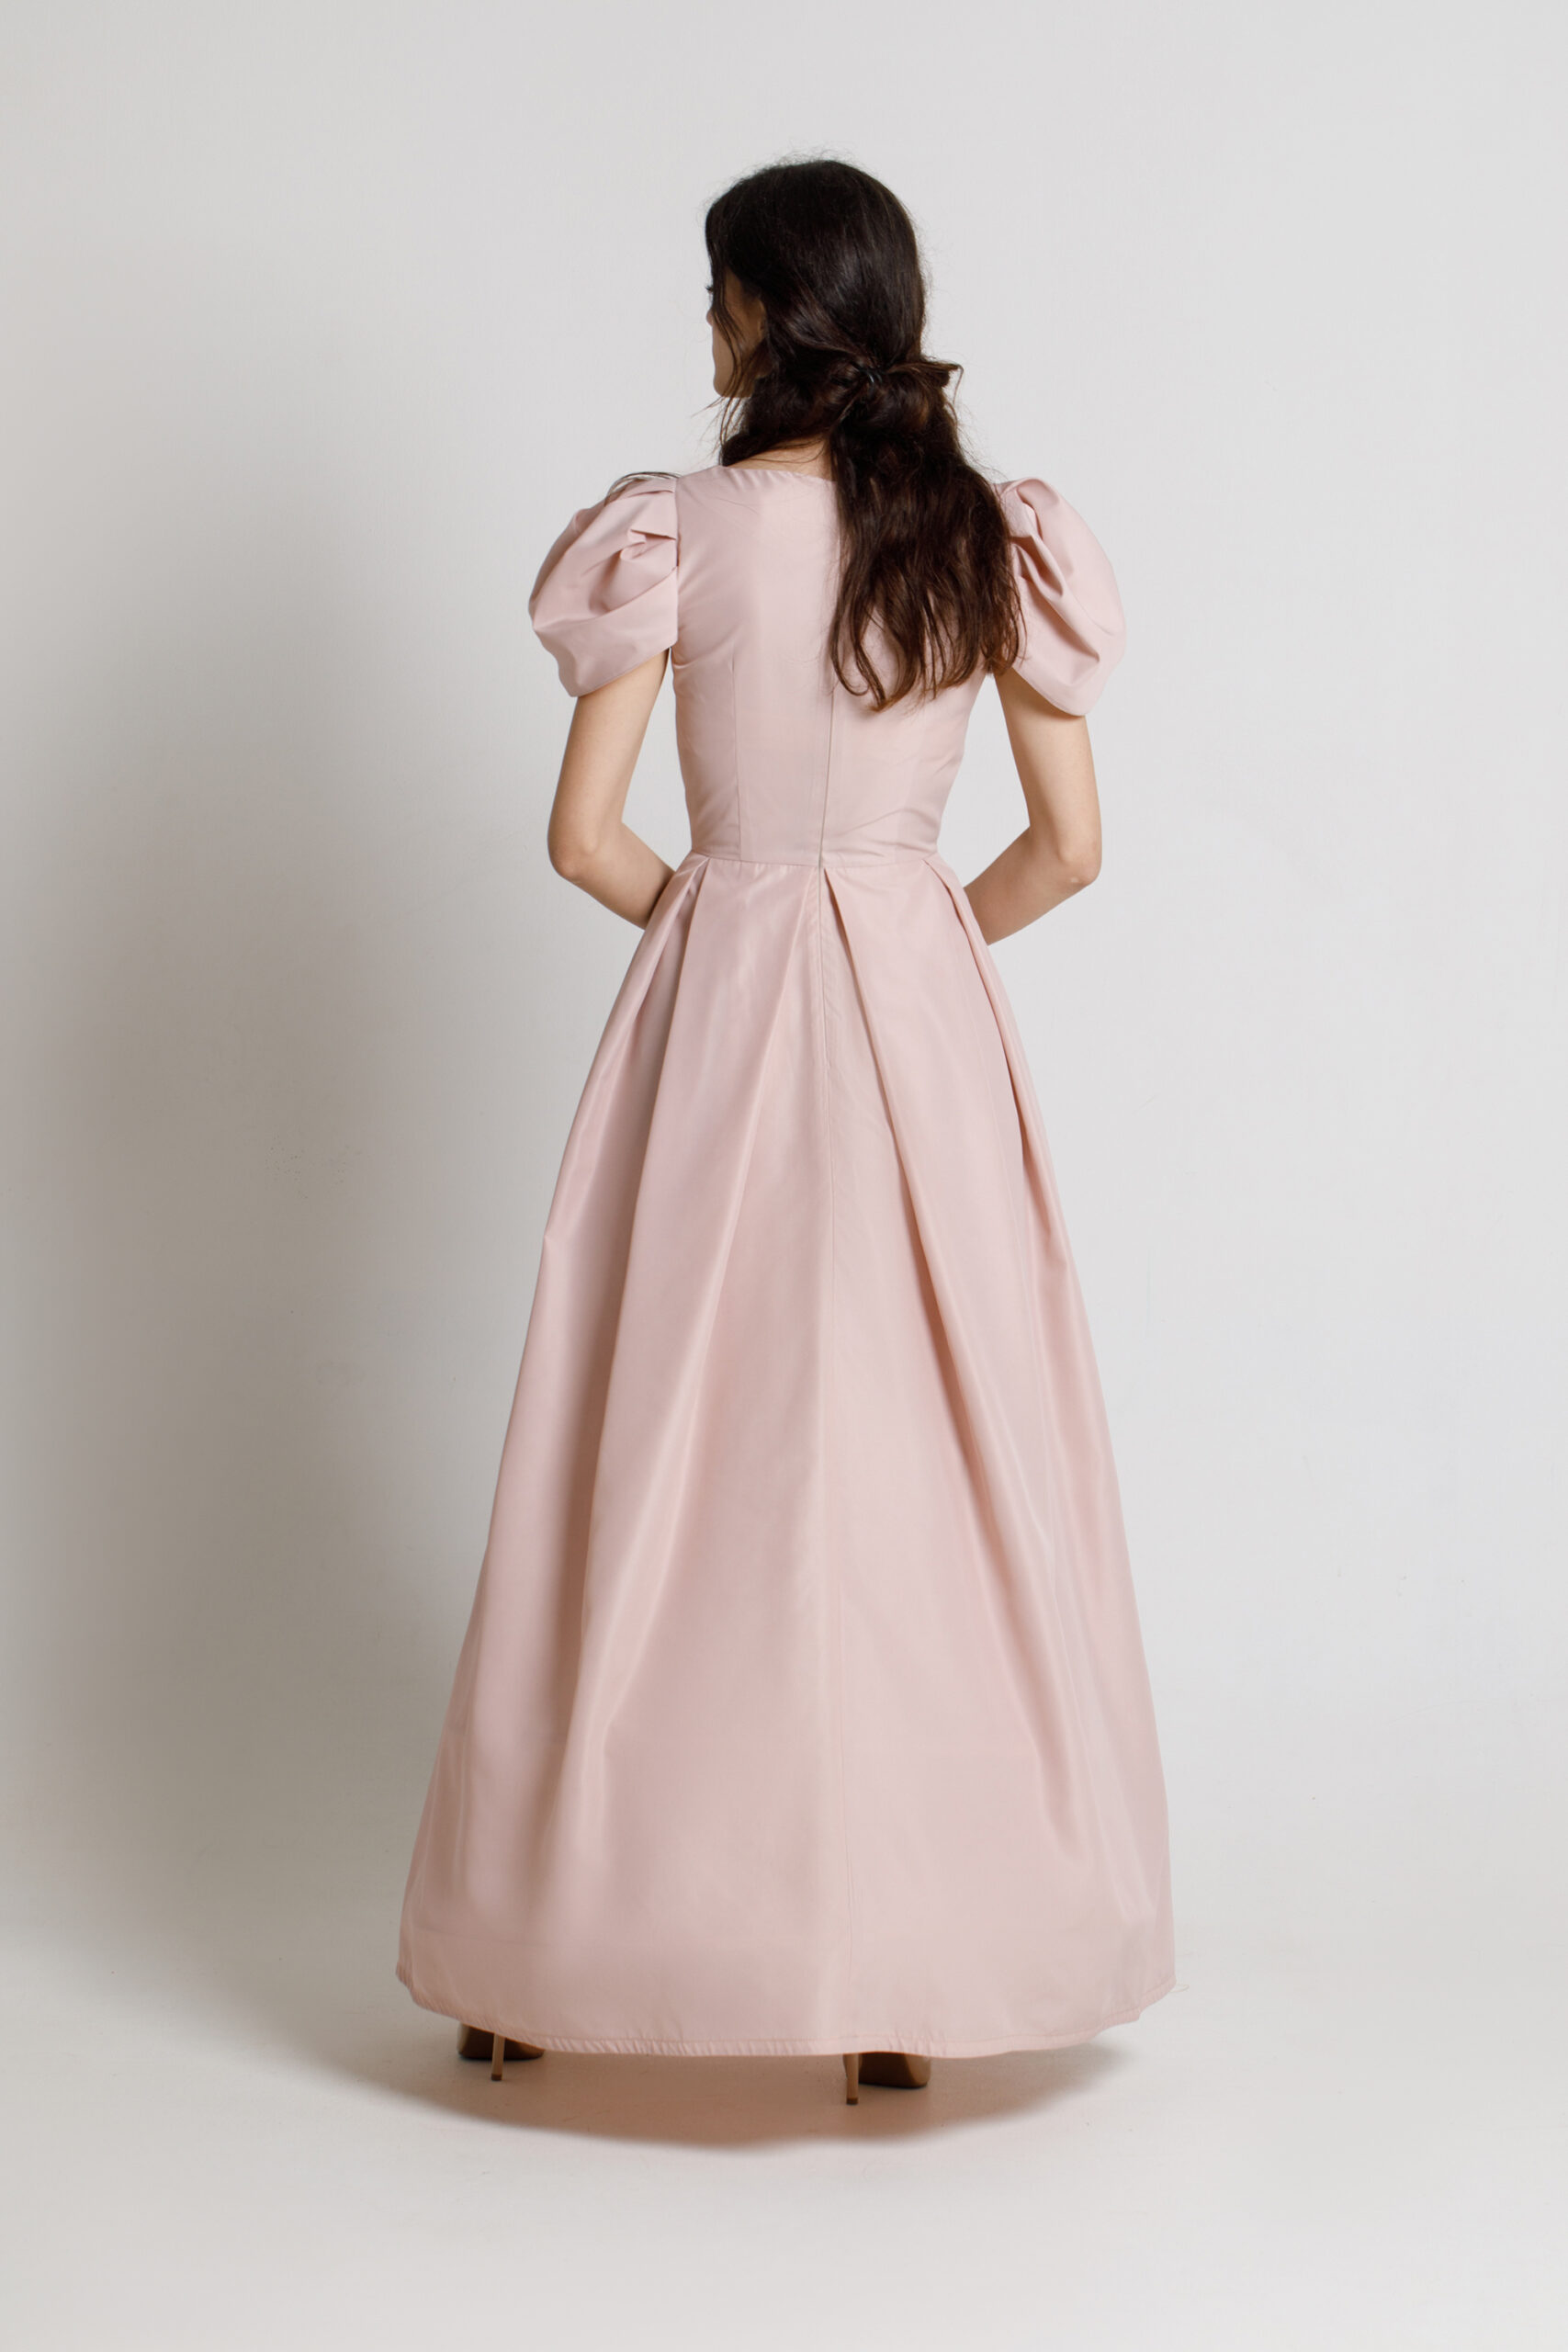 CHLOE elegant powder pink taffeta dress with crinoline. Natural fabrics, original design, handmade embroidery